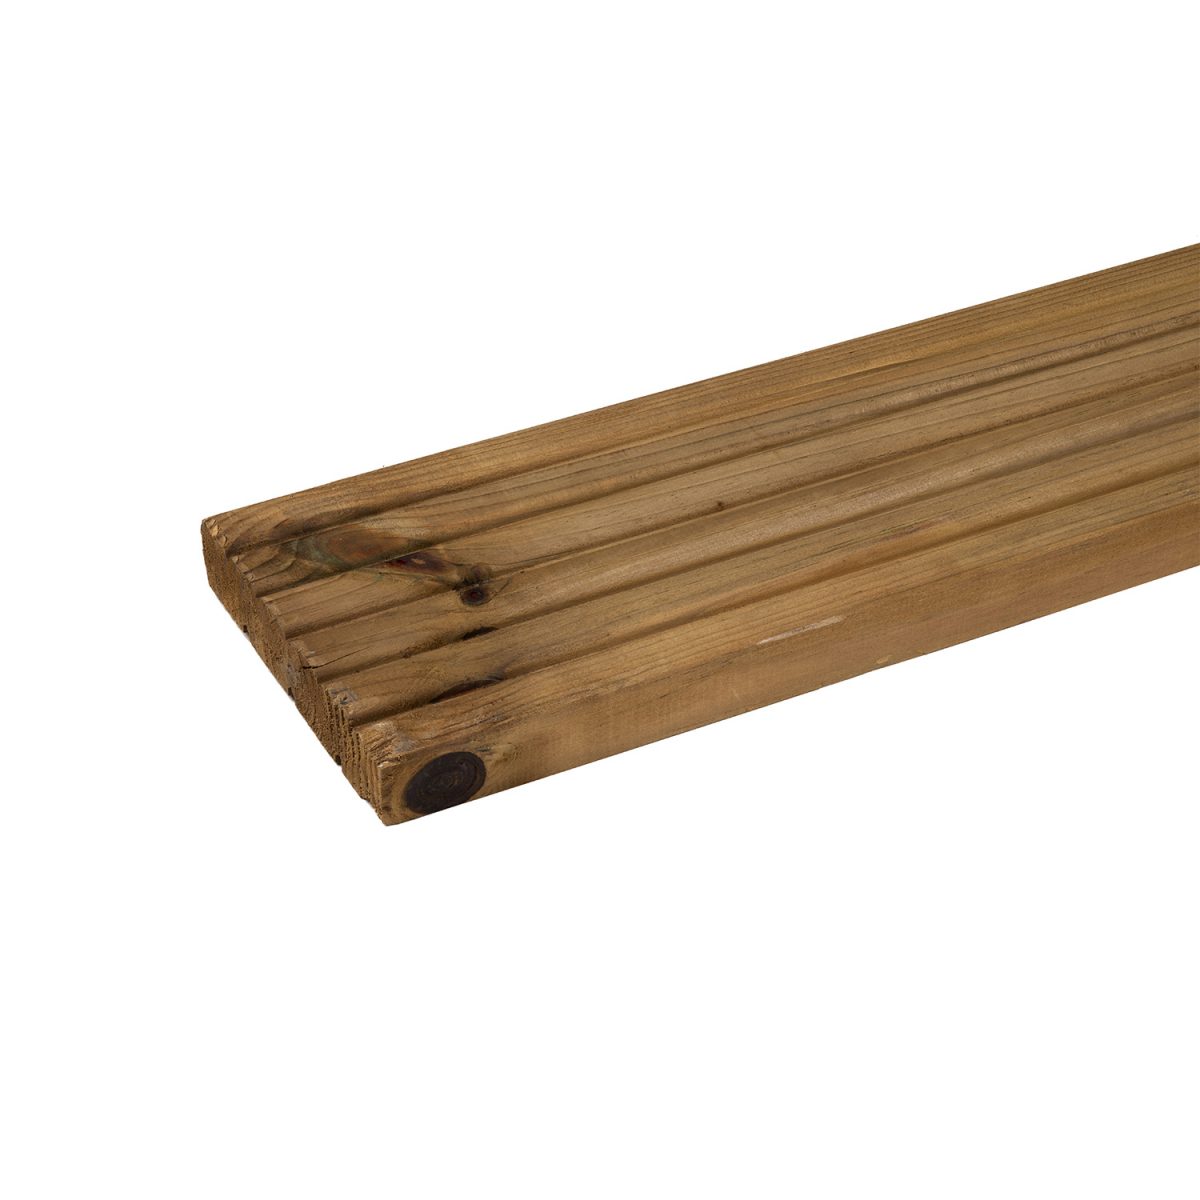 Deck de madera tratada autoclave antideslizante